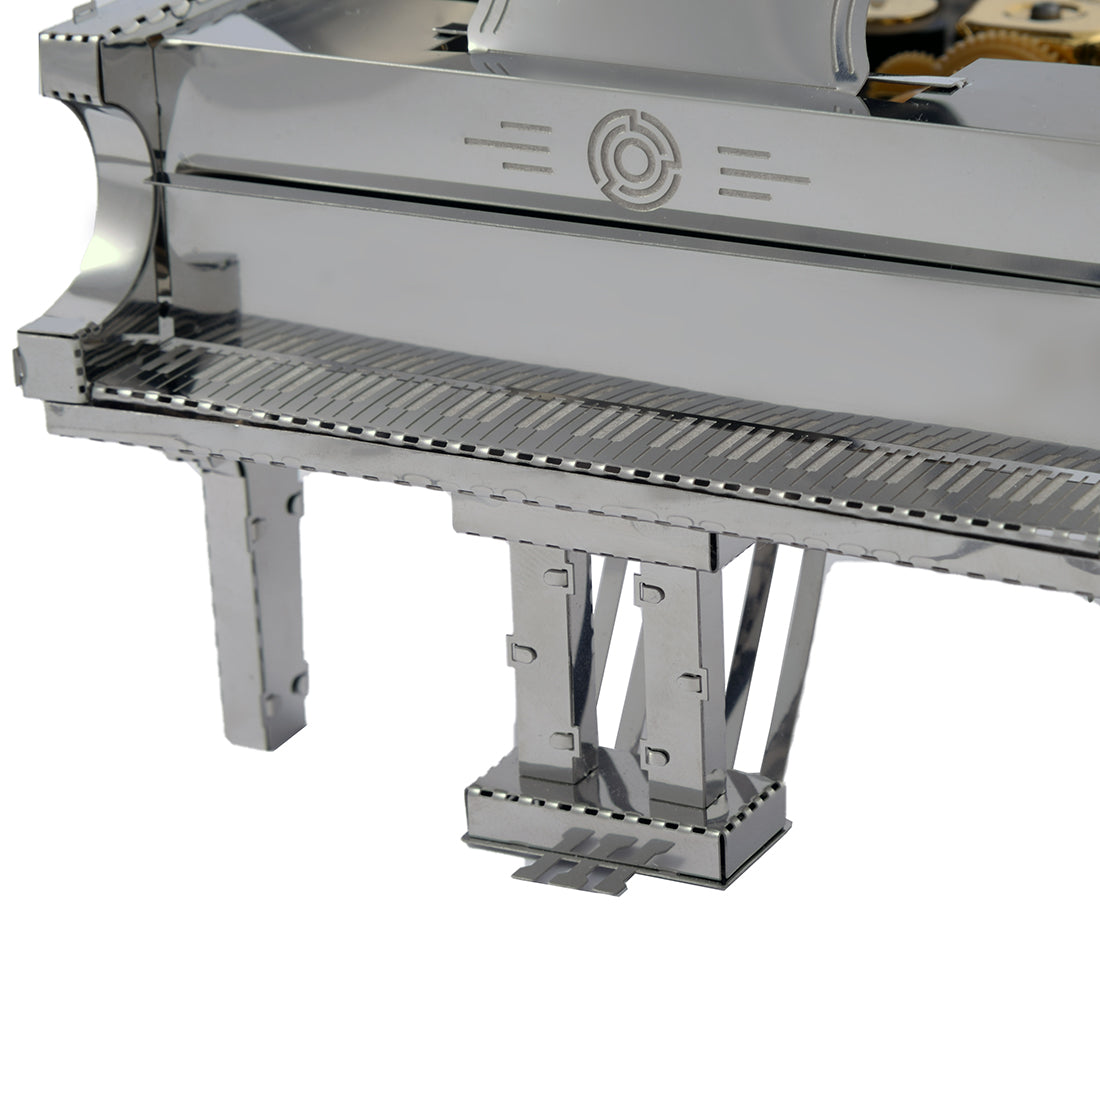 23pcs 3D Metal Piano Model Building Kit Music Box- Grande Pianola